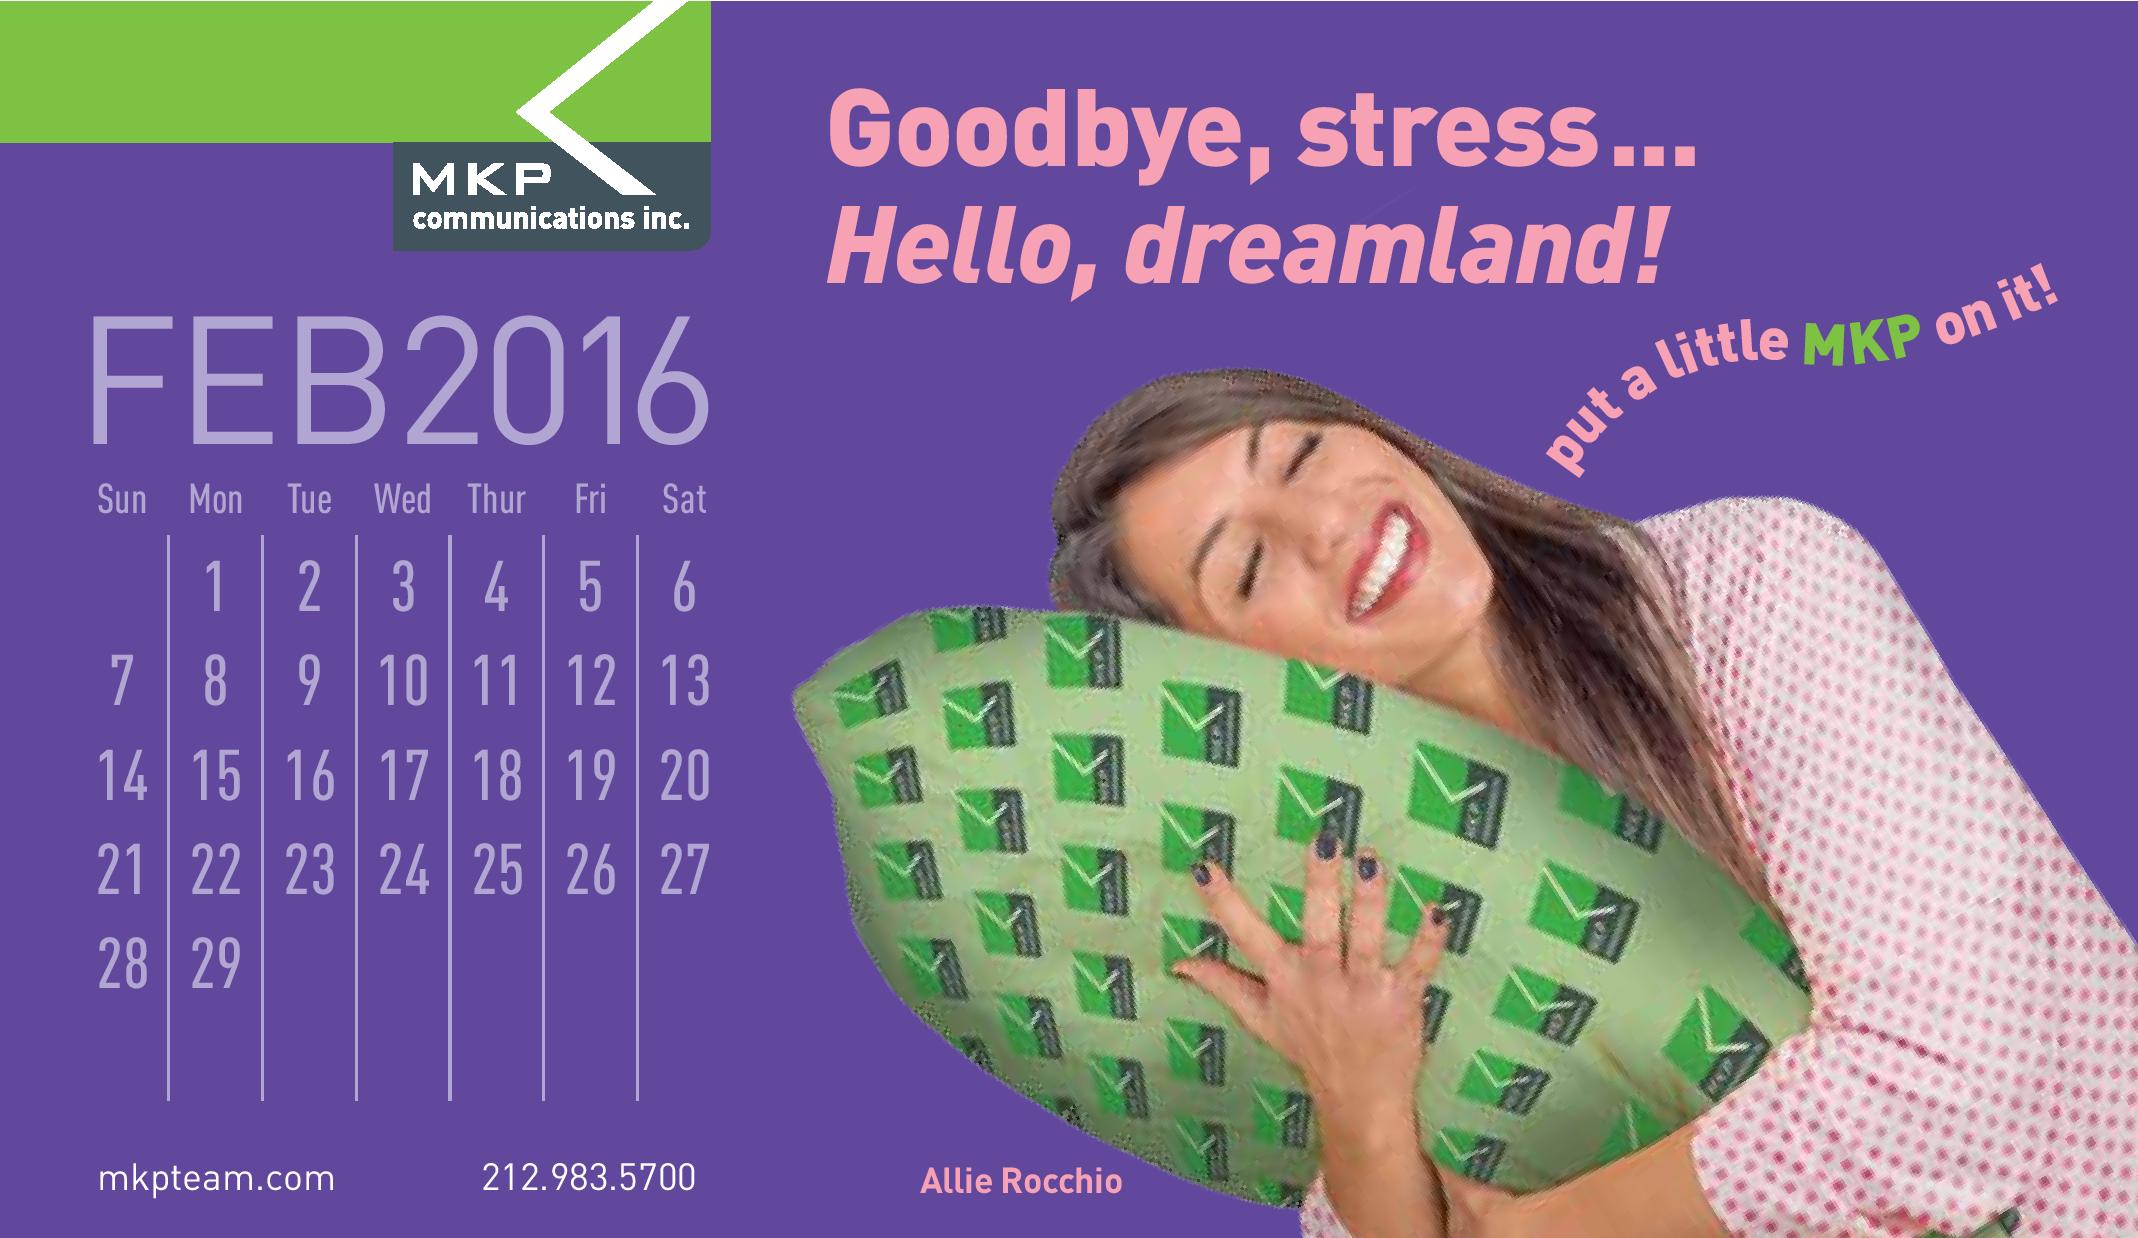 2015 Calendar page 5